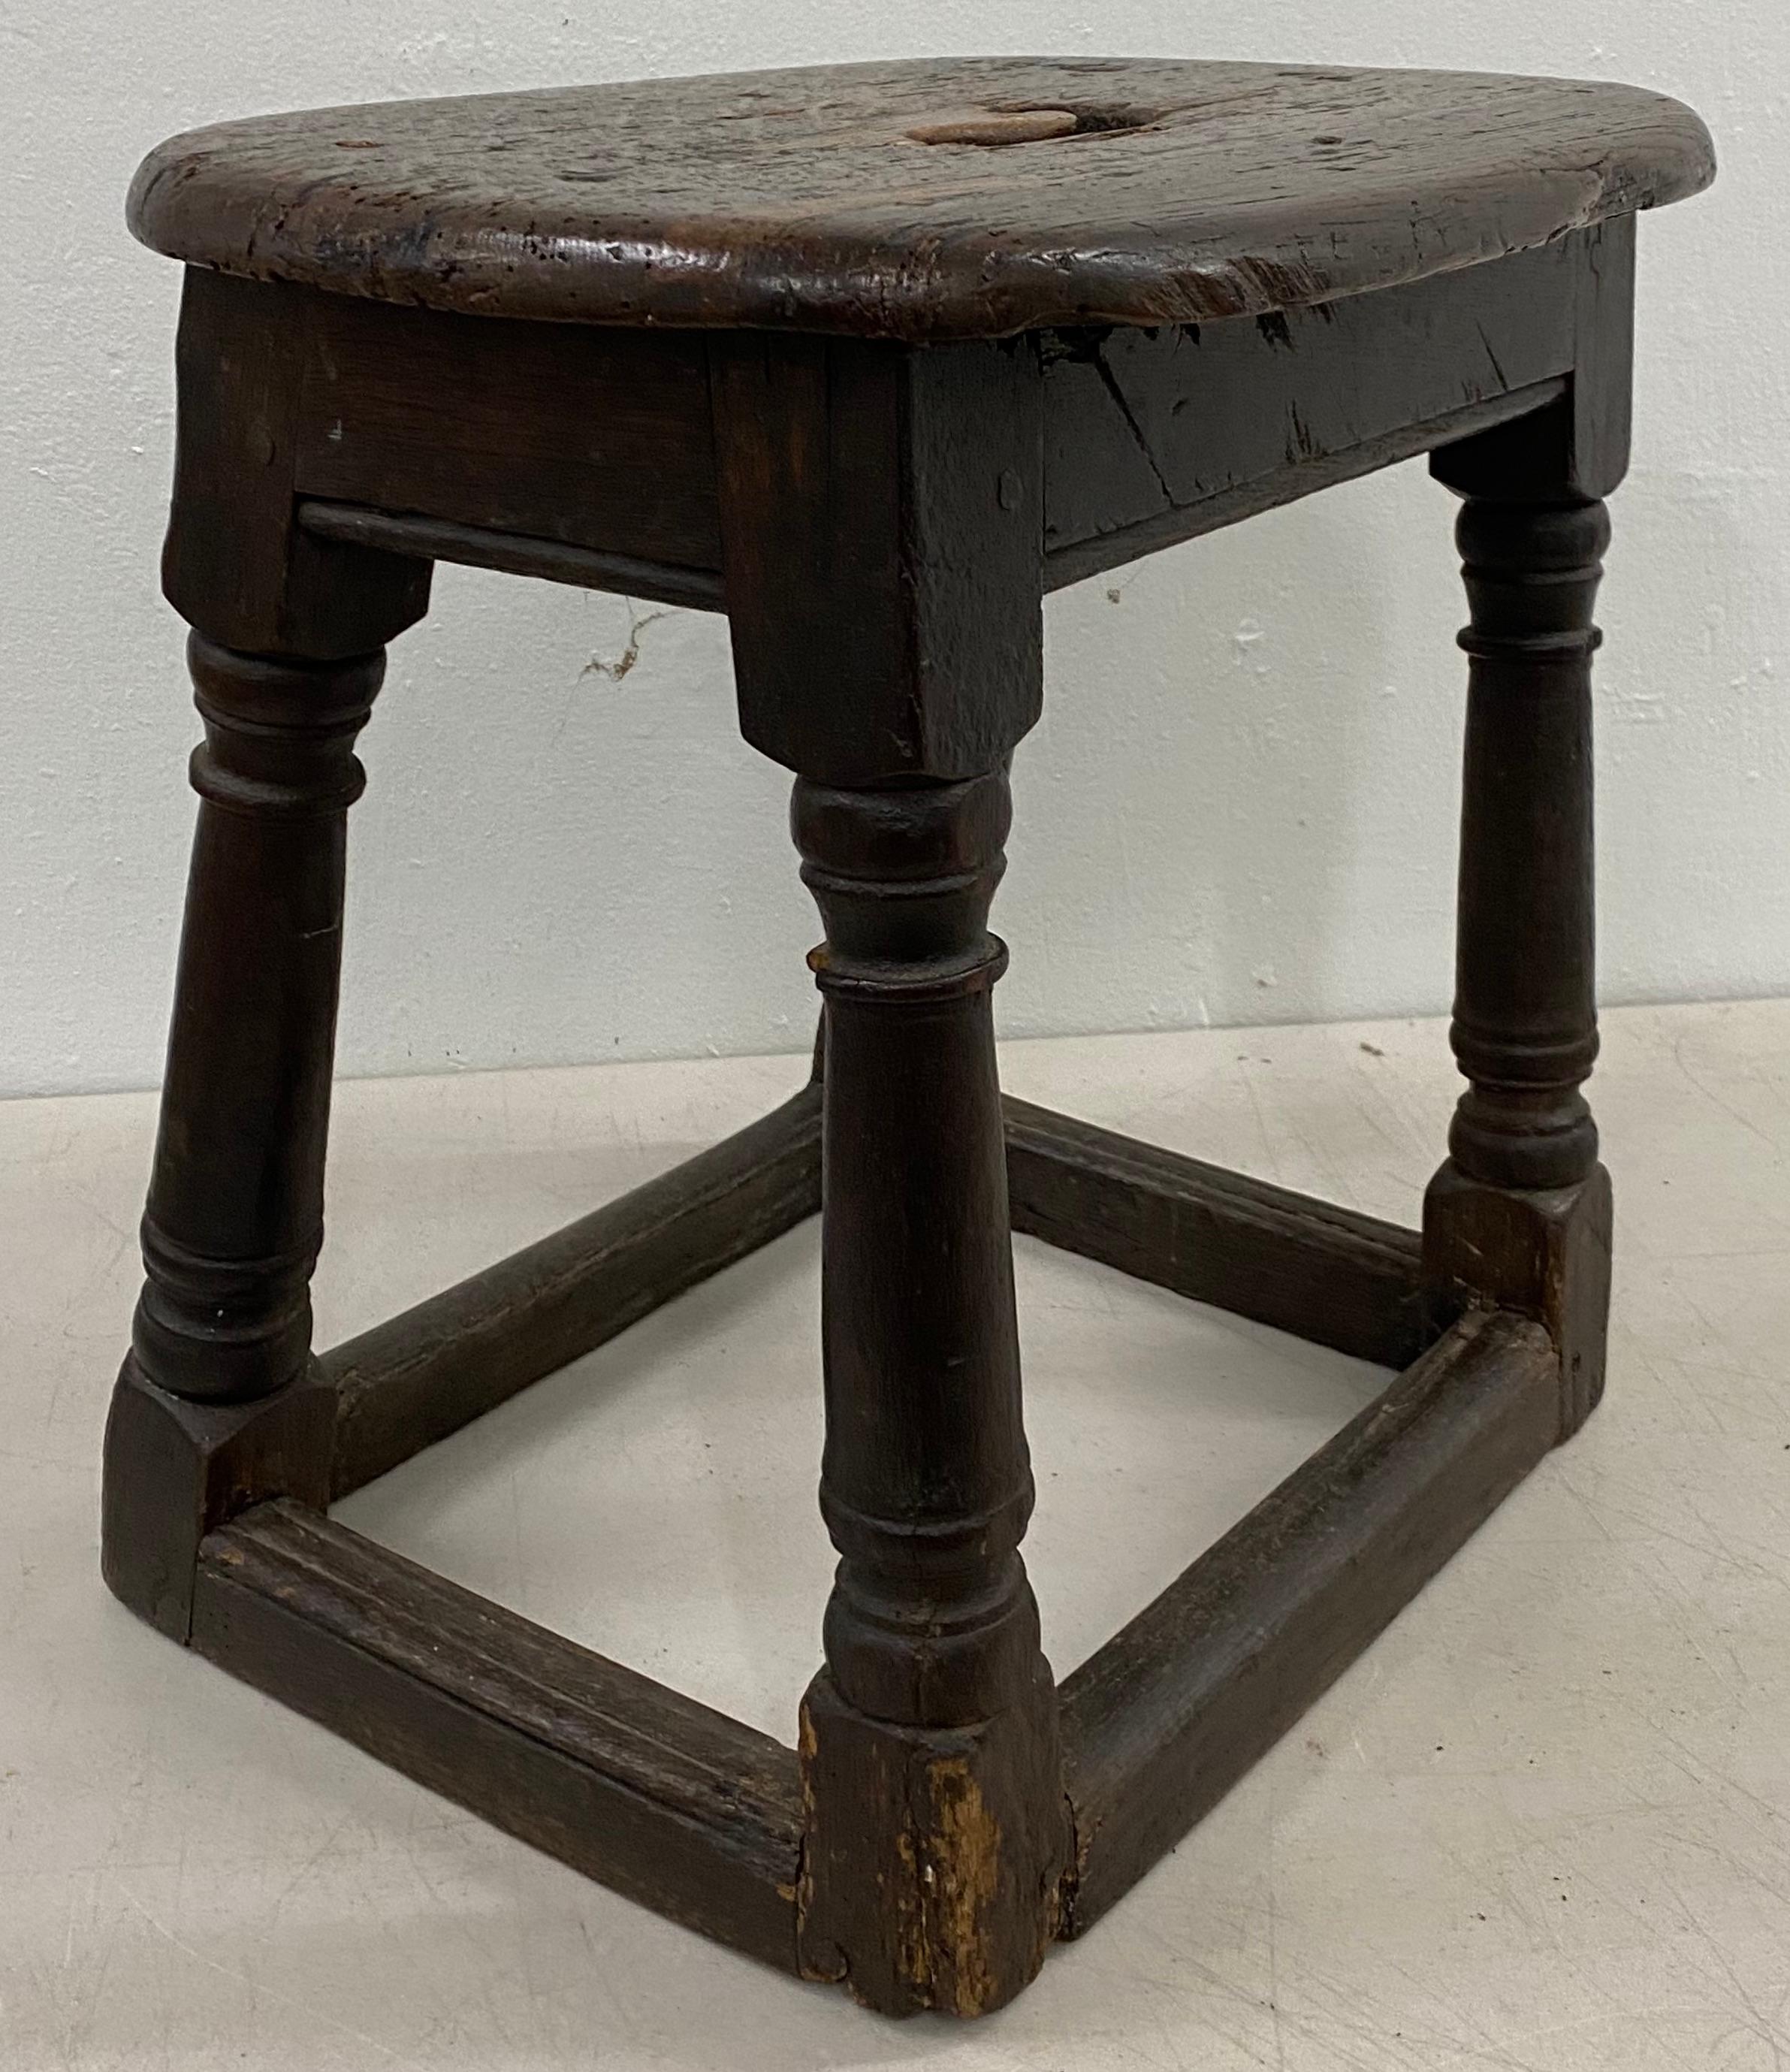 17th century stool